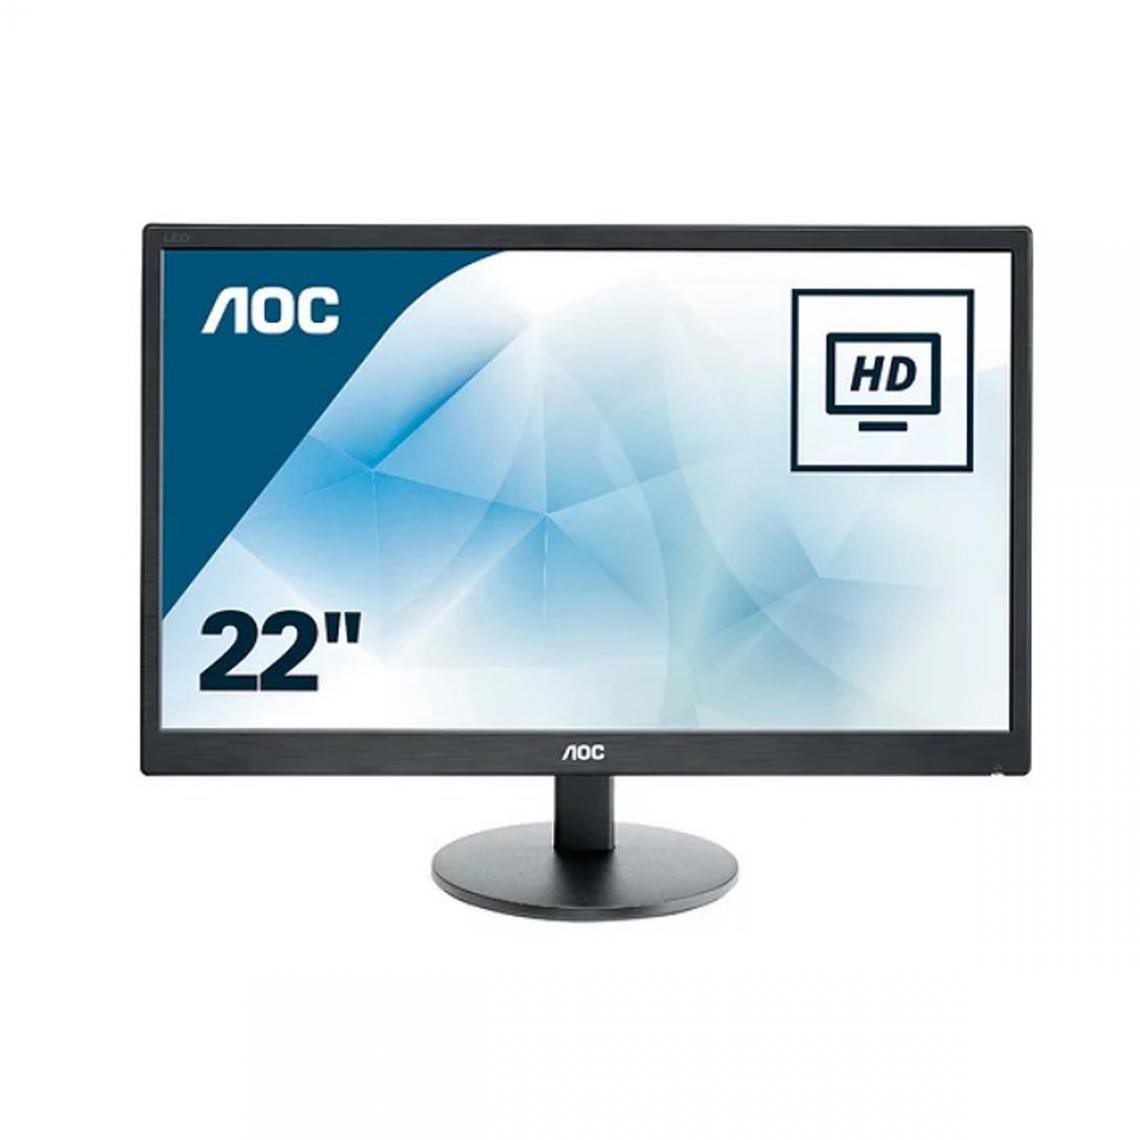 Aoc - AOC - E2270SWDN - Moniteur PC